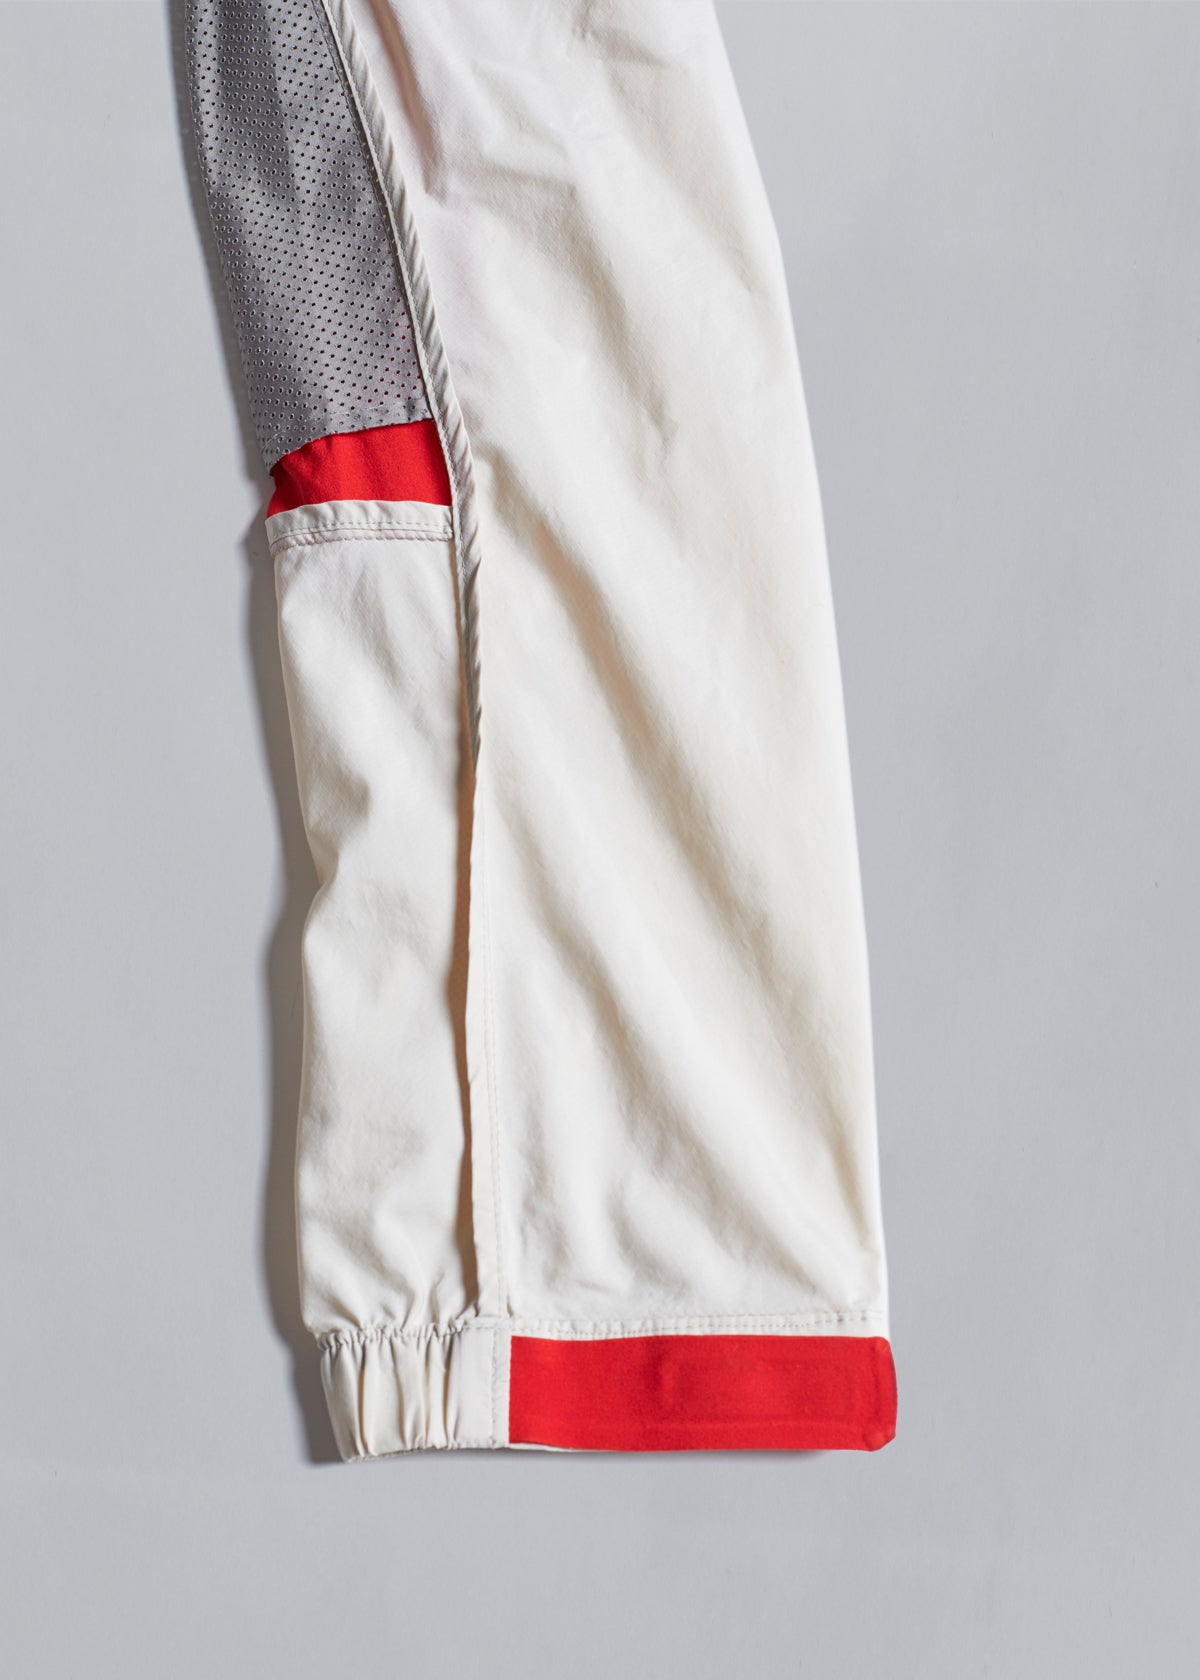 Nike/Undercover Gyakusou Insideout Vapor Jacket SS2011 - Medium - The Archivist Store